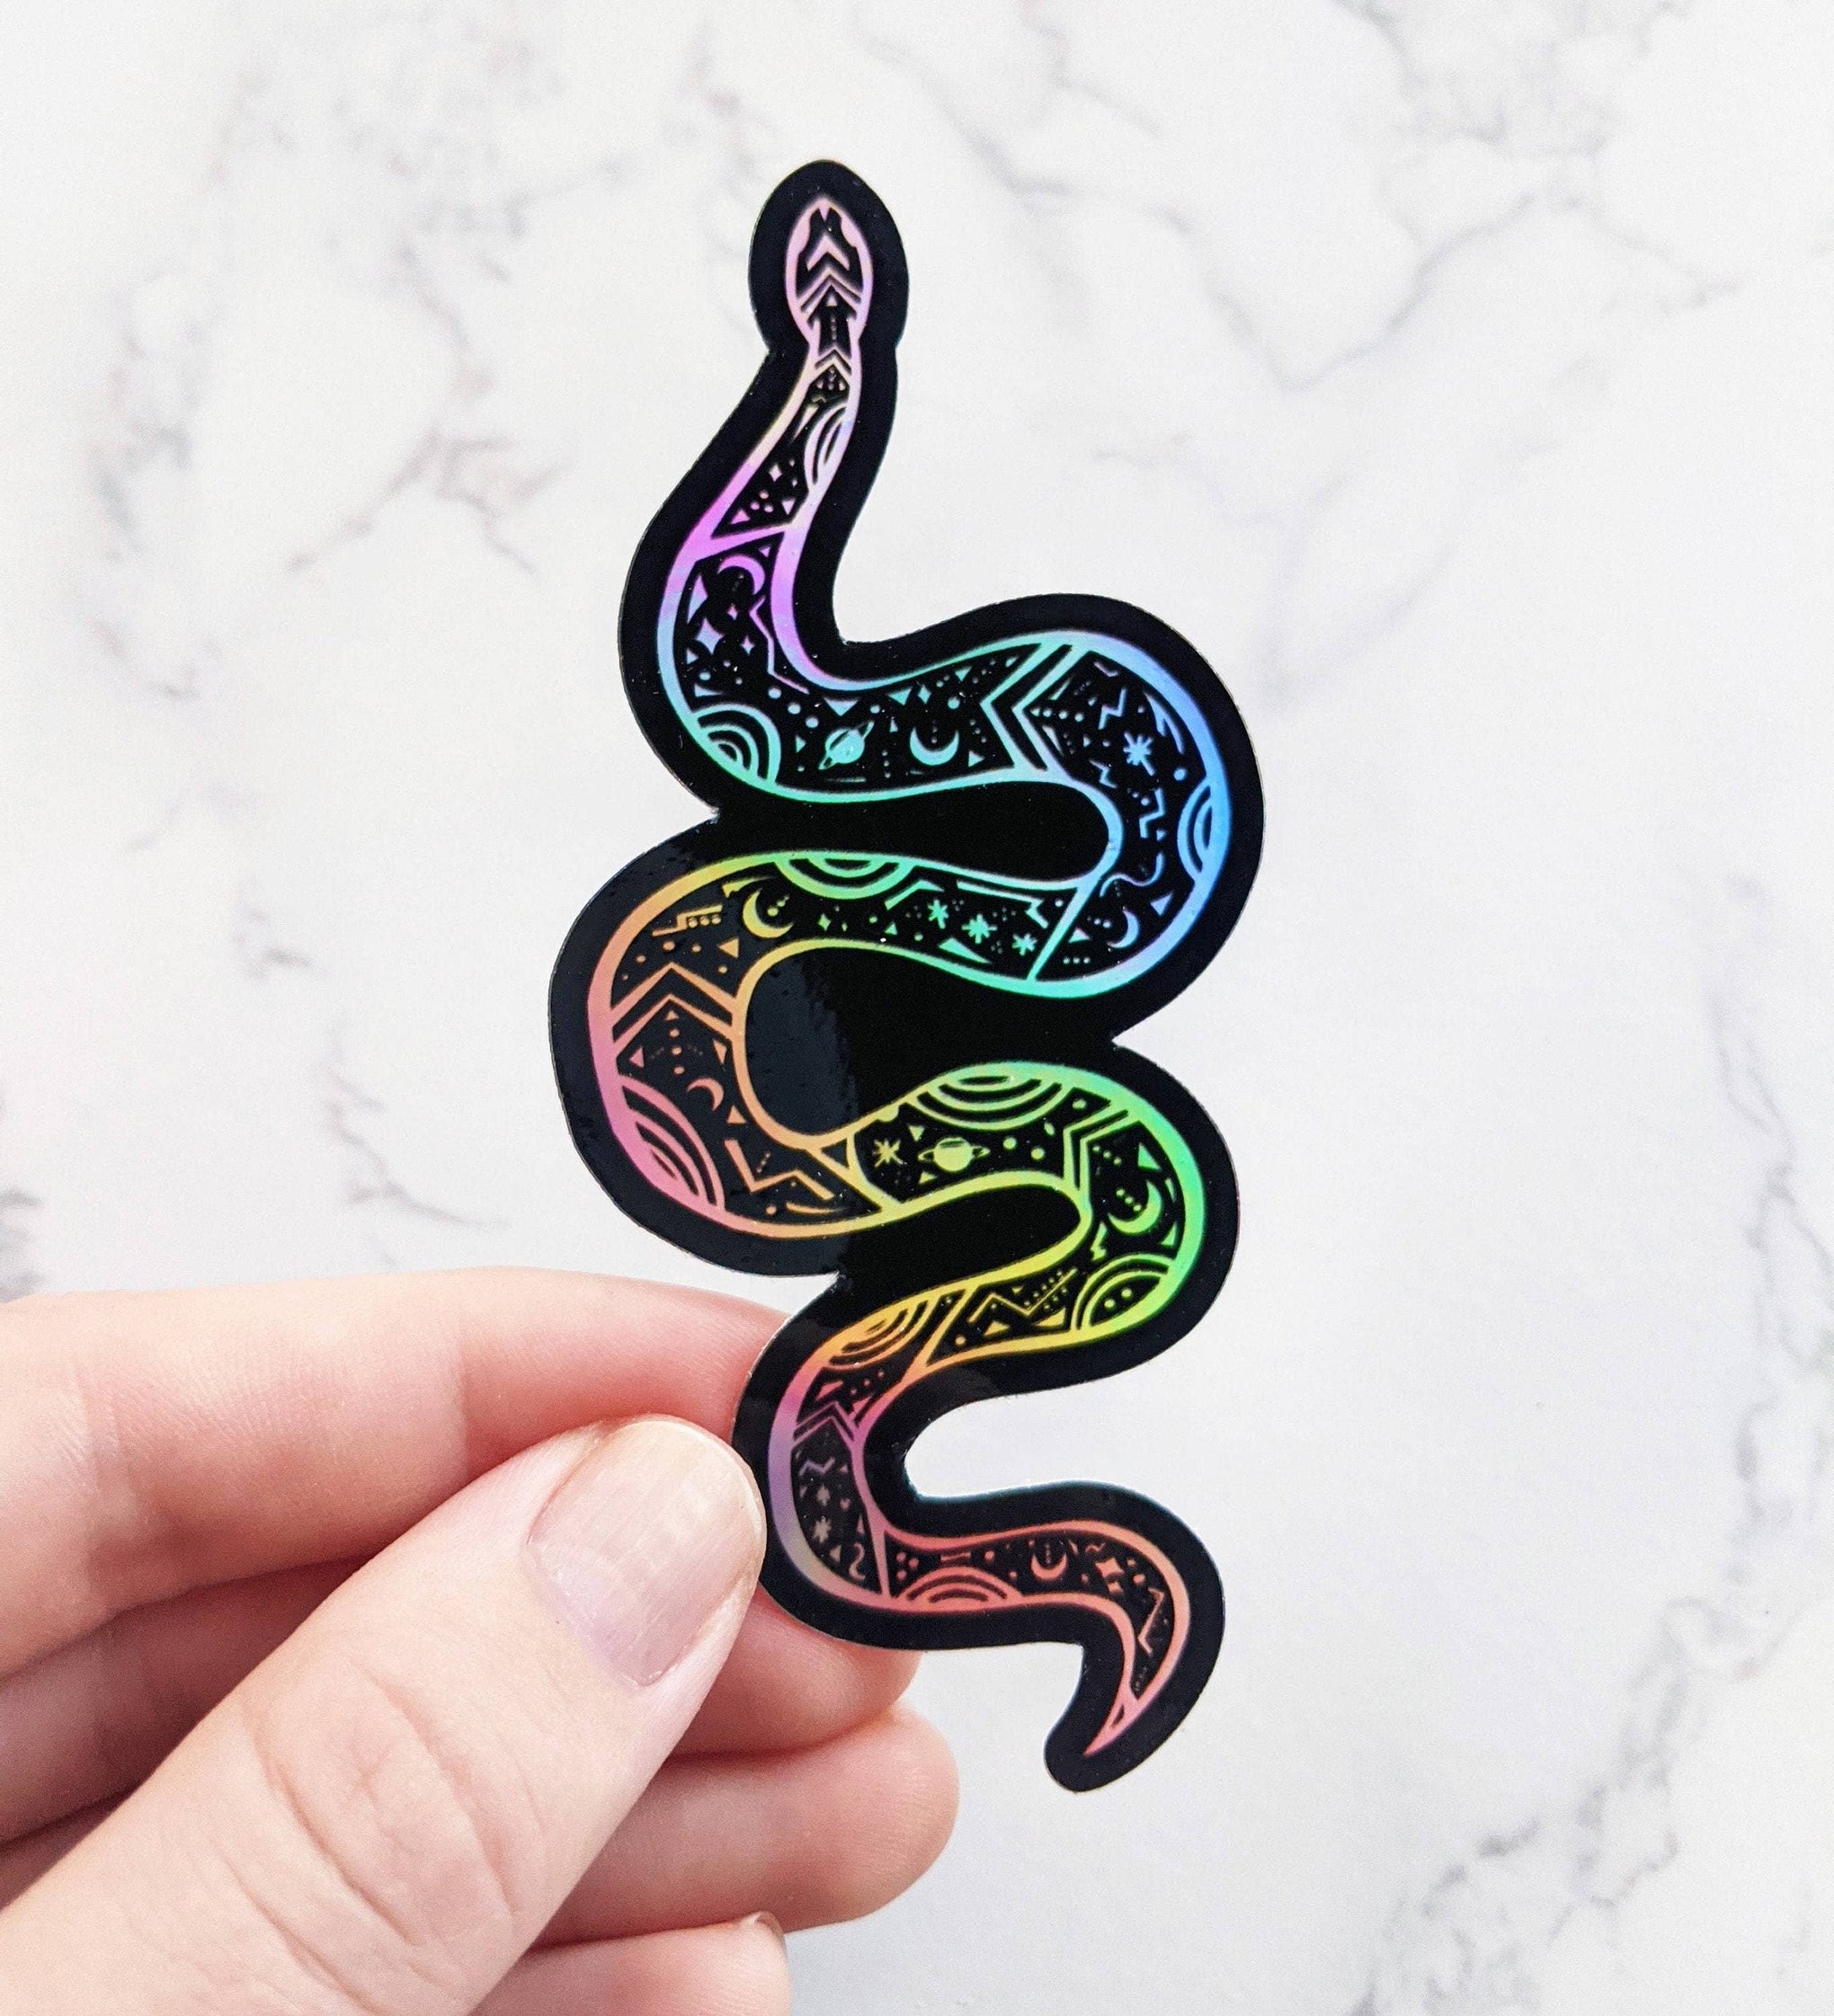 bathroom Sticker of snakes